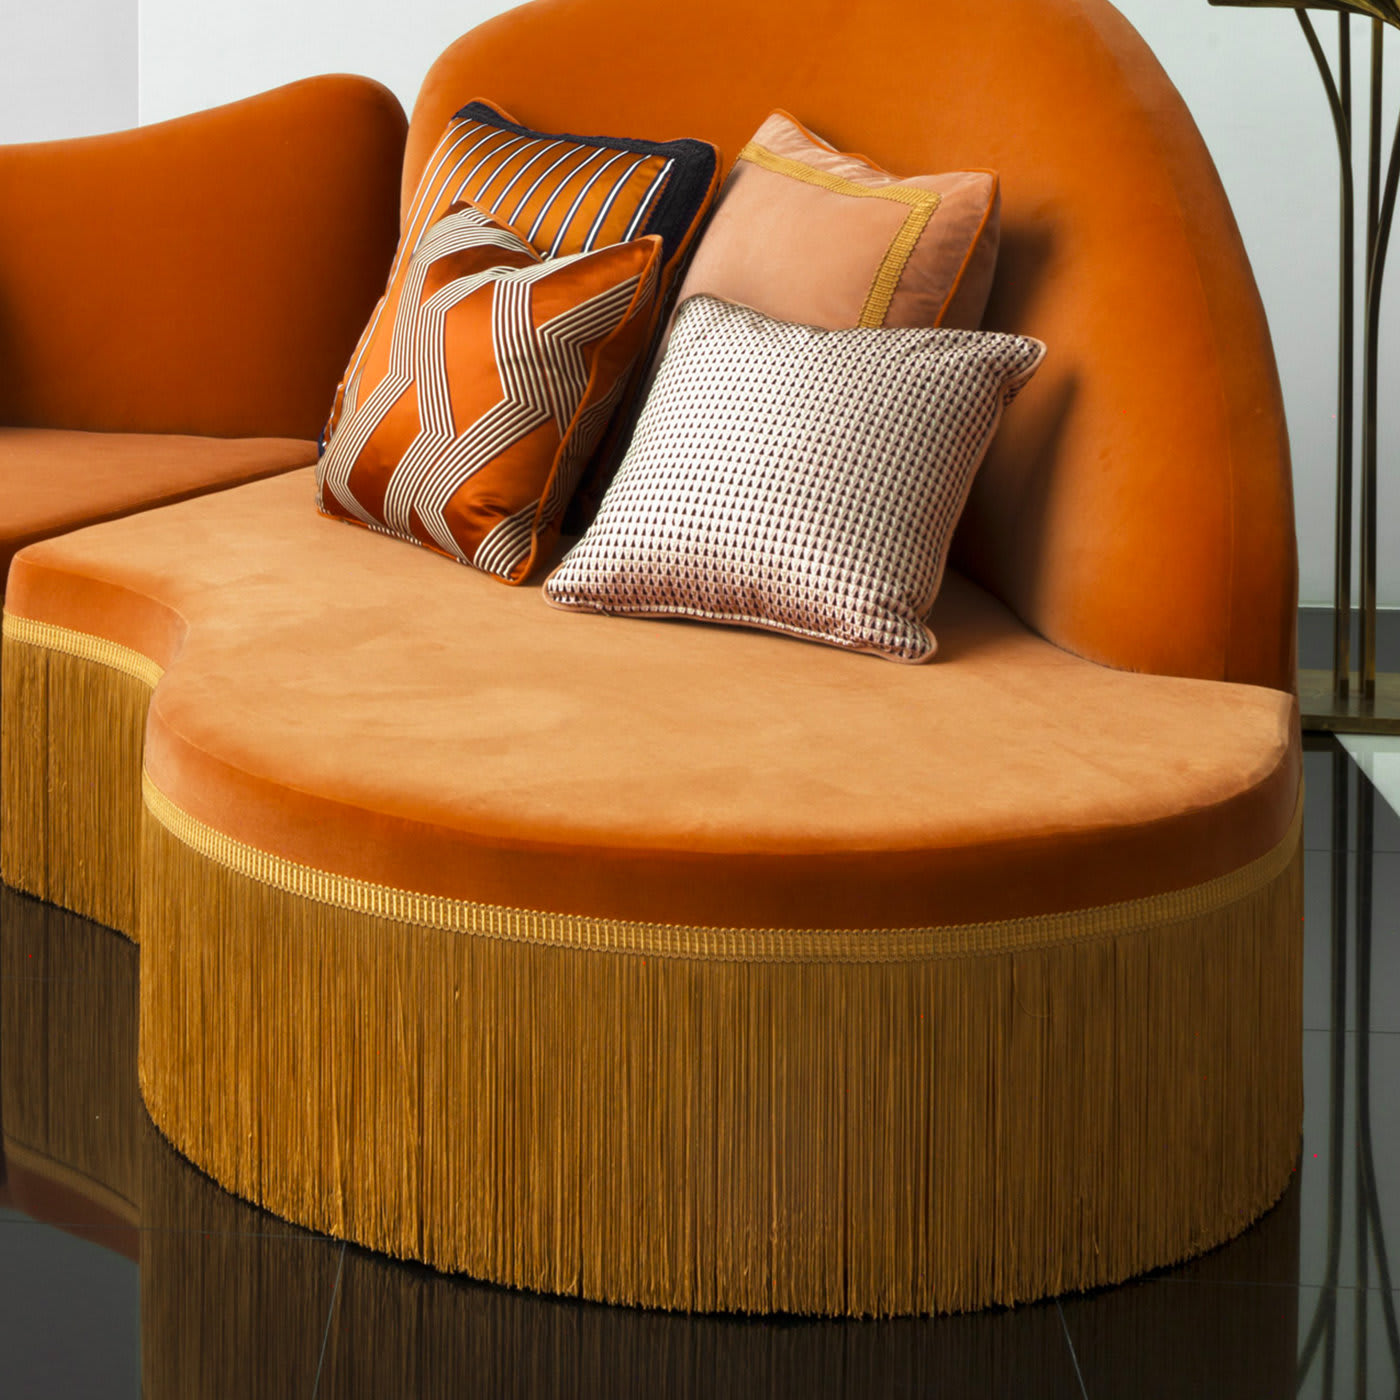 Wave Orange 3-Piece Sectional Sofa #2 - Chiara Provasi